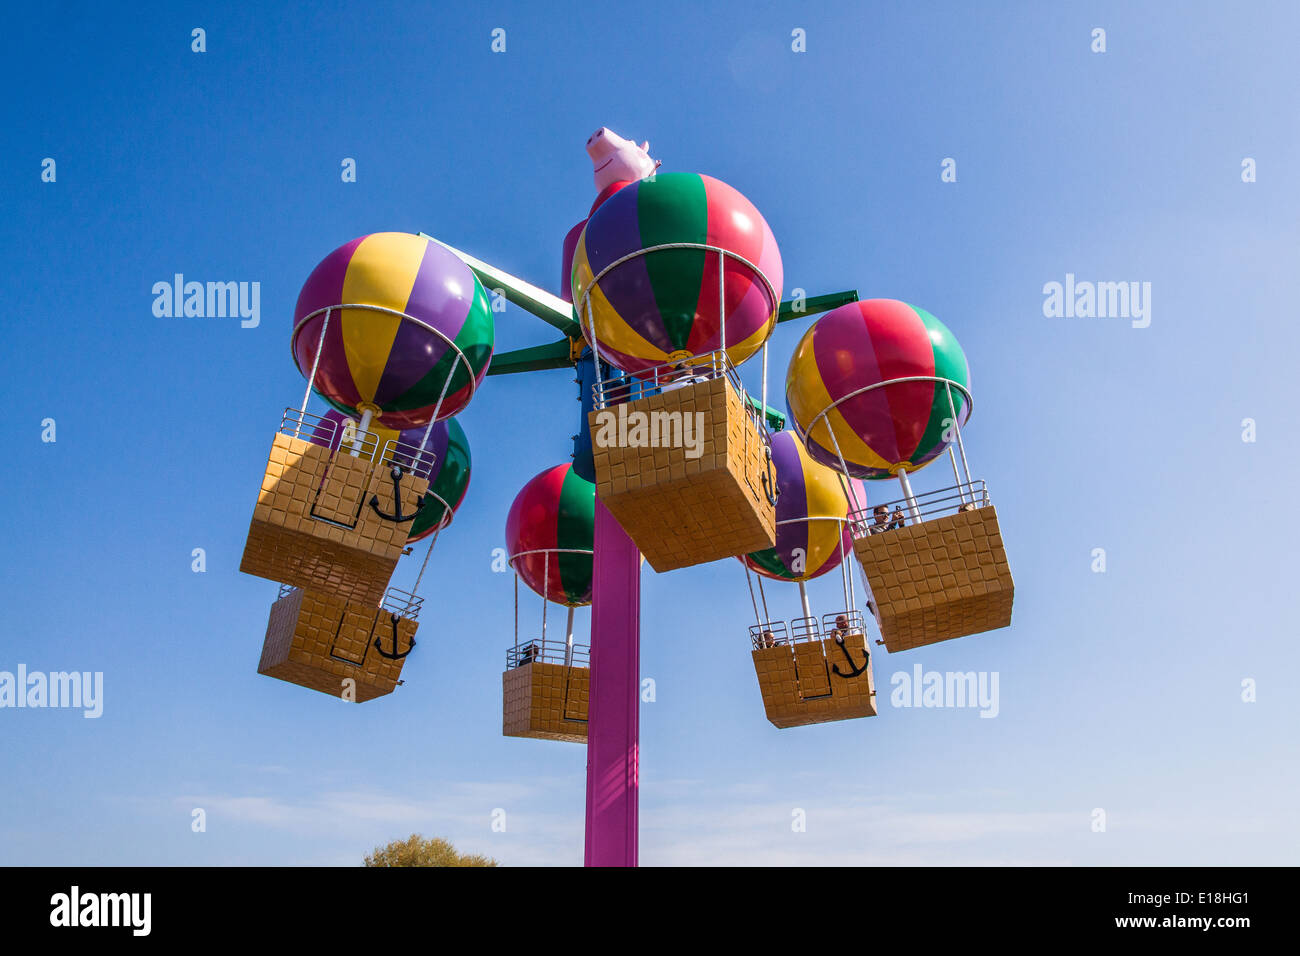 Peppa Pigs balloon ride at Peppa Pig world, Paultons Park,Romsey, Southampton, England, United Kingdom. Stock Photo